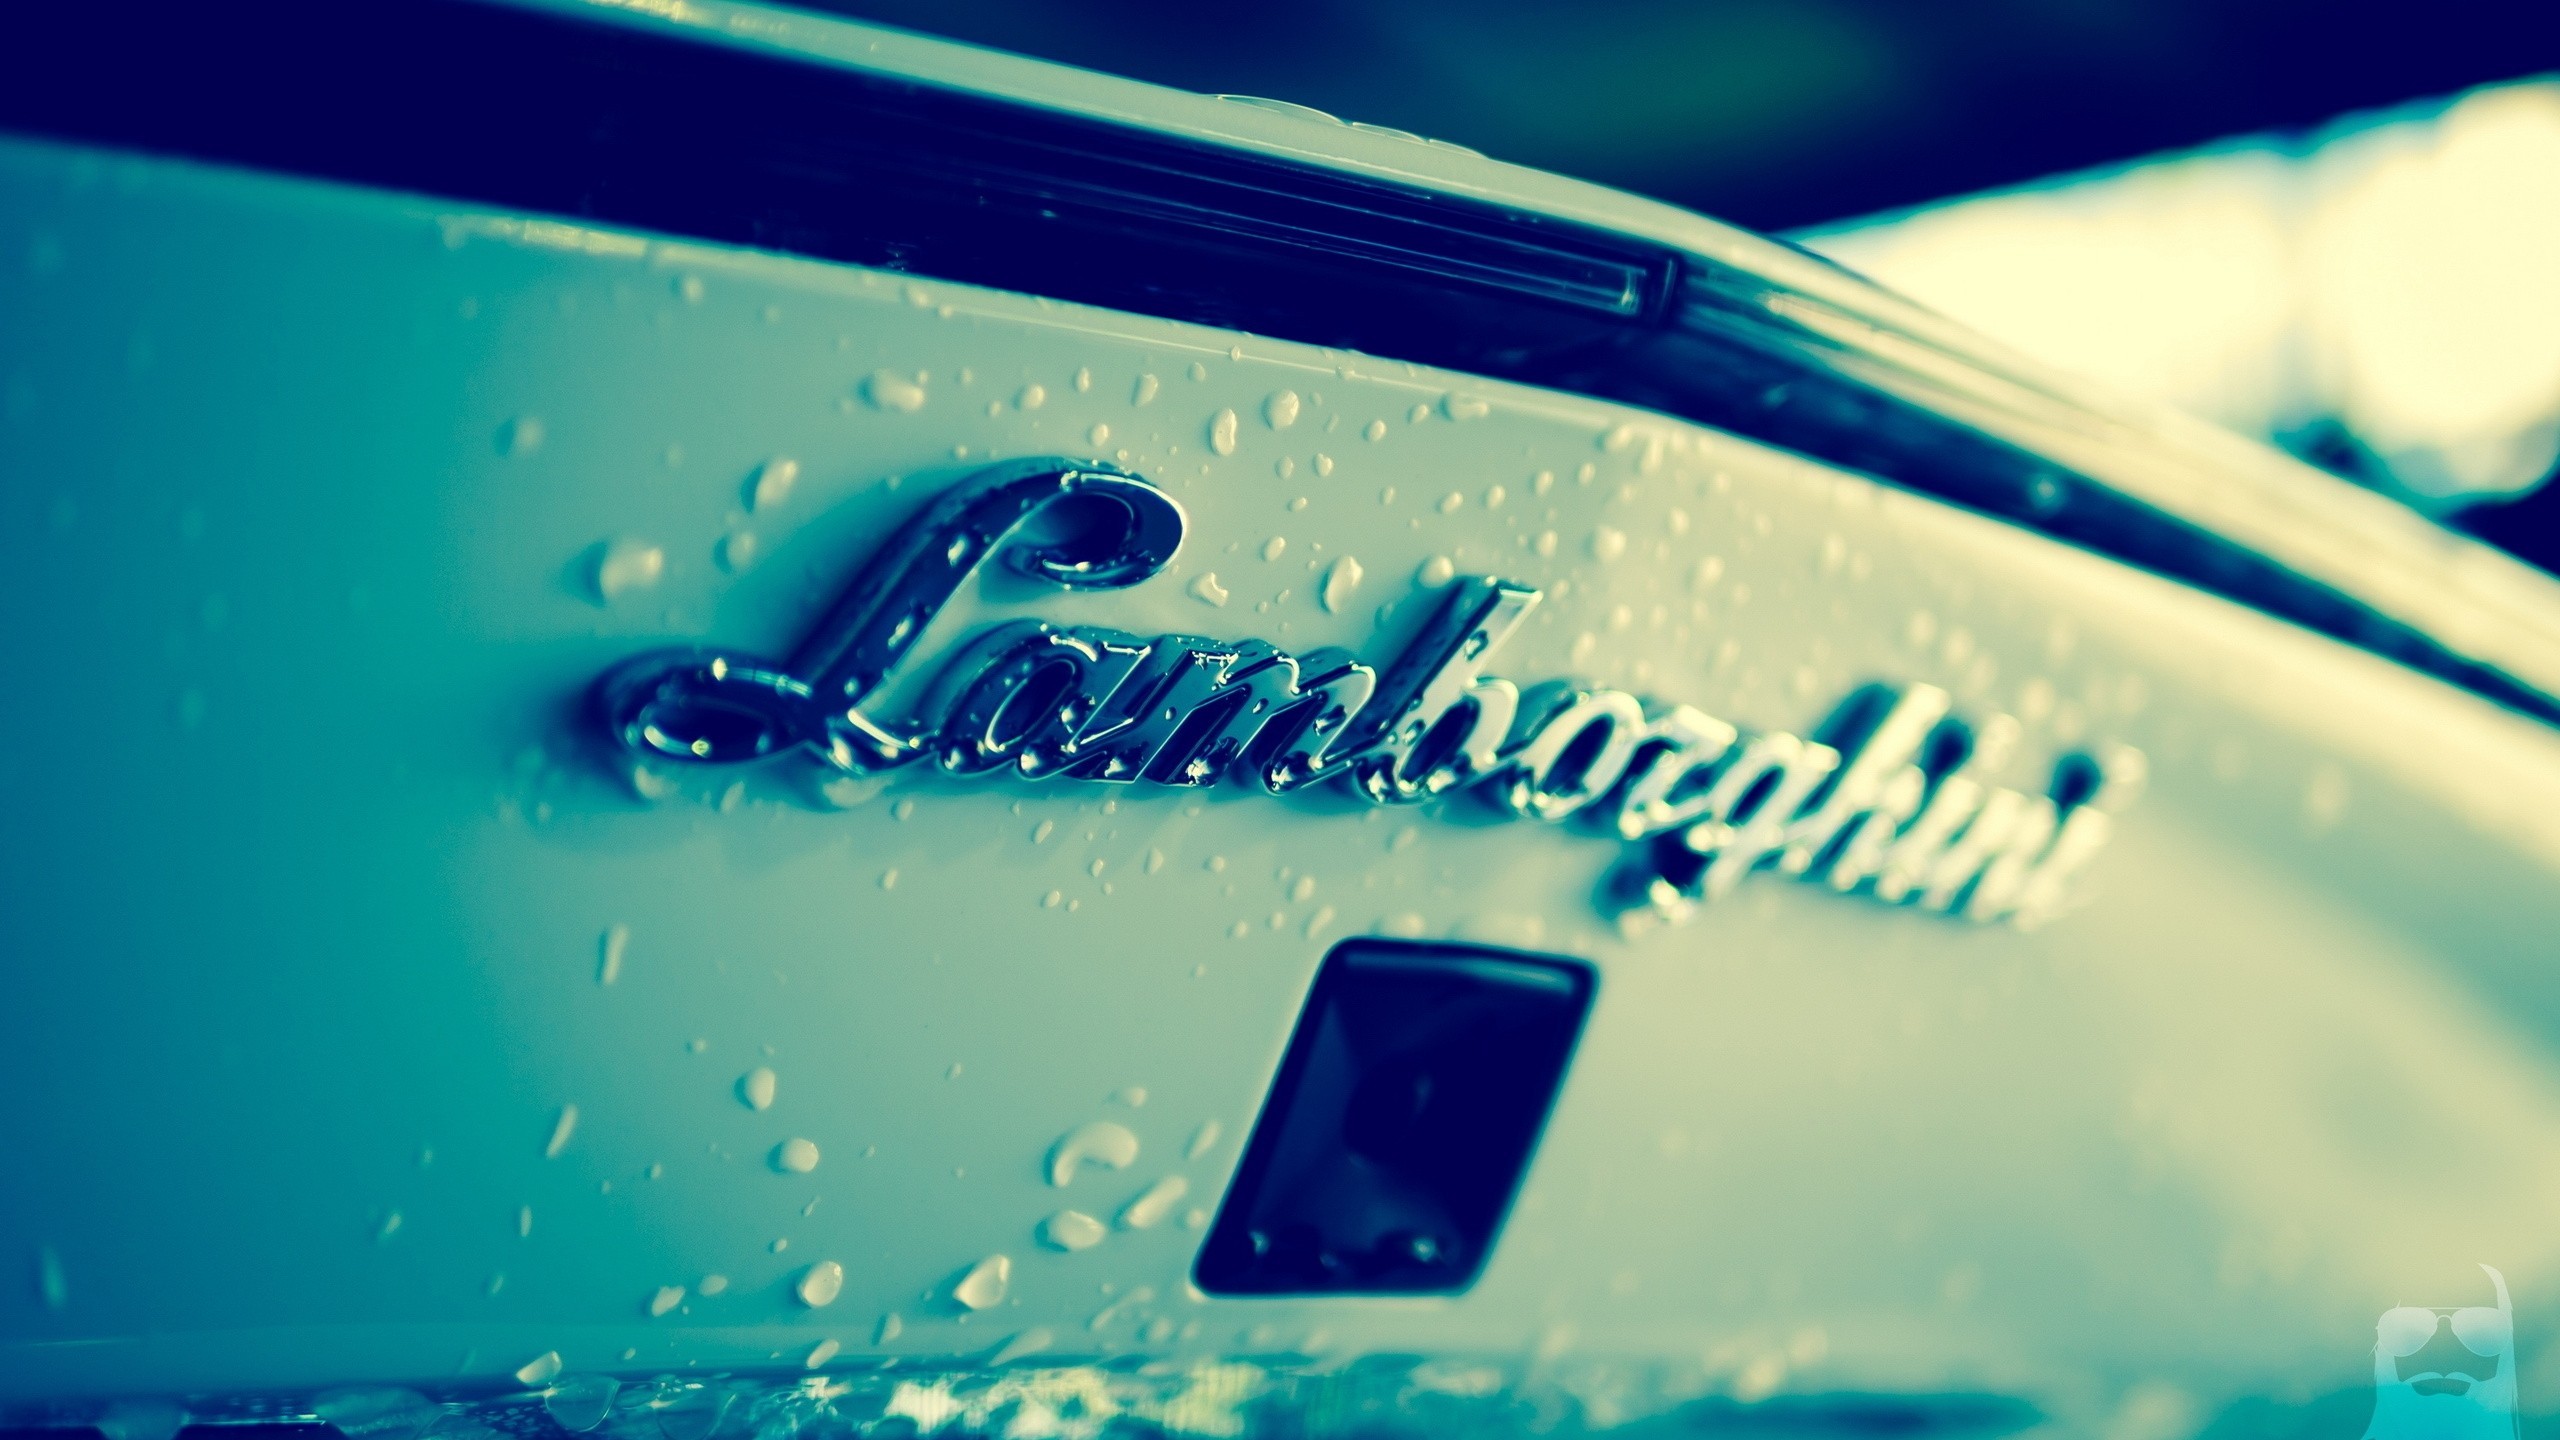 General 2560x1440 Lamborghini logo water drops car vehicle filter